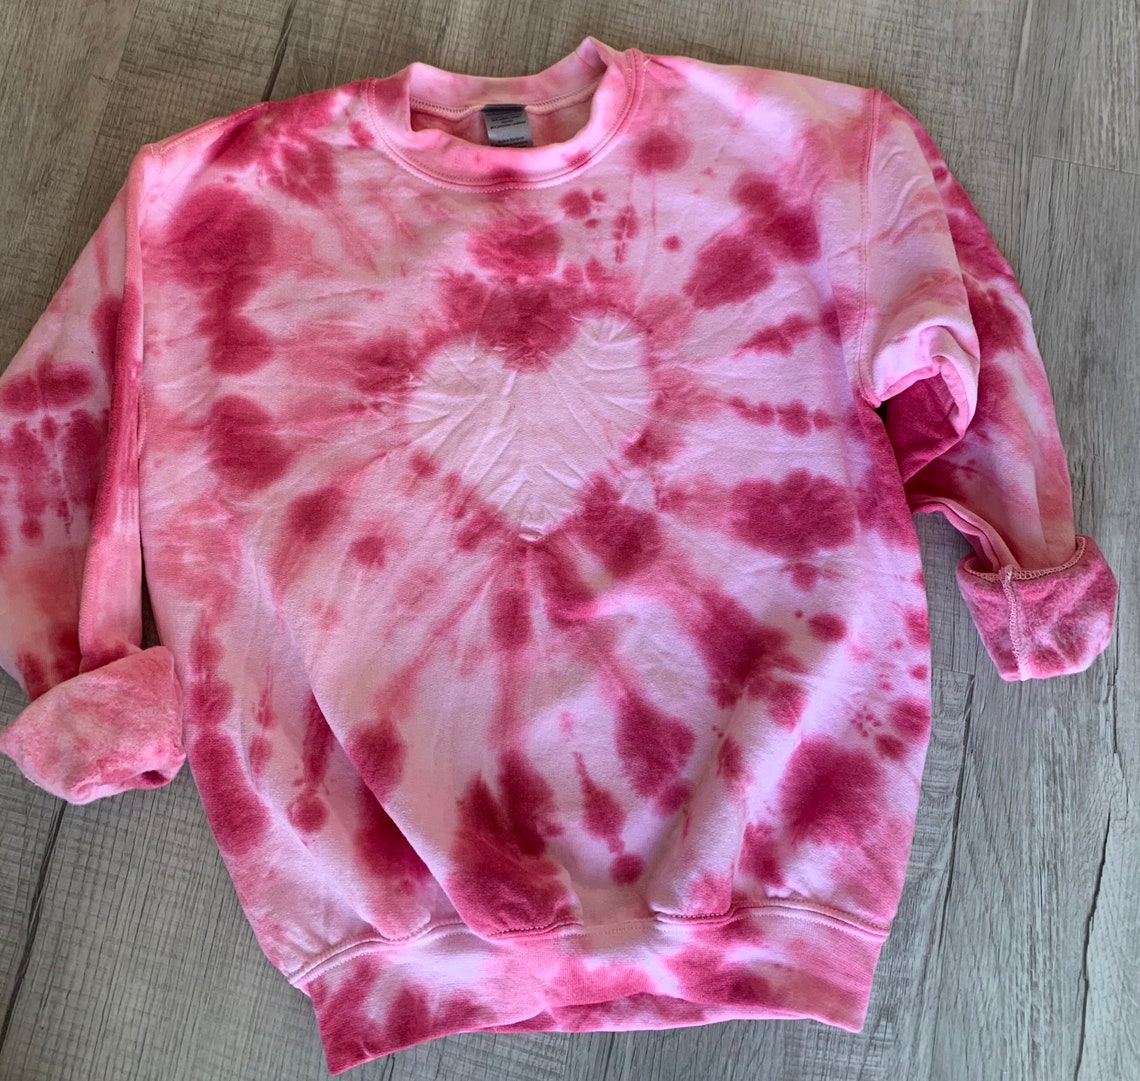 Heart tie dye shirt/sweatshirt-Adult | Etsy